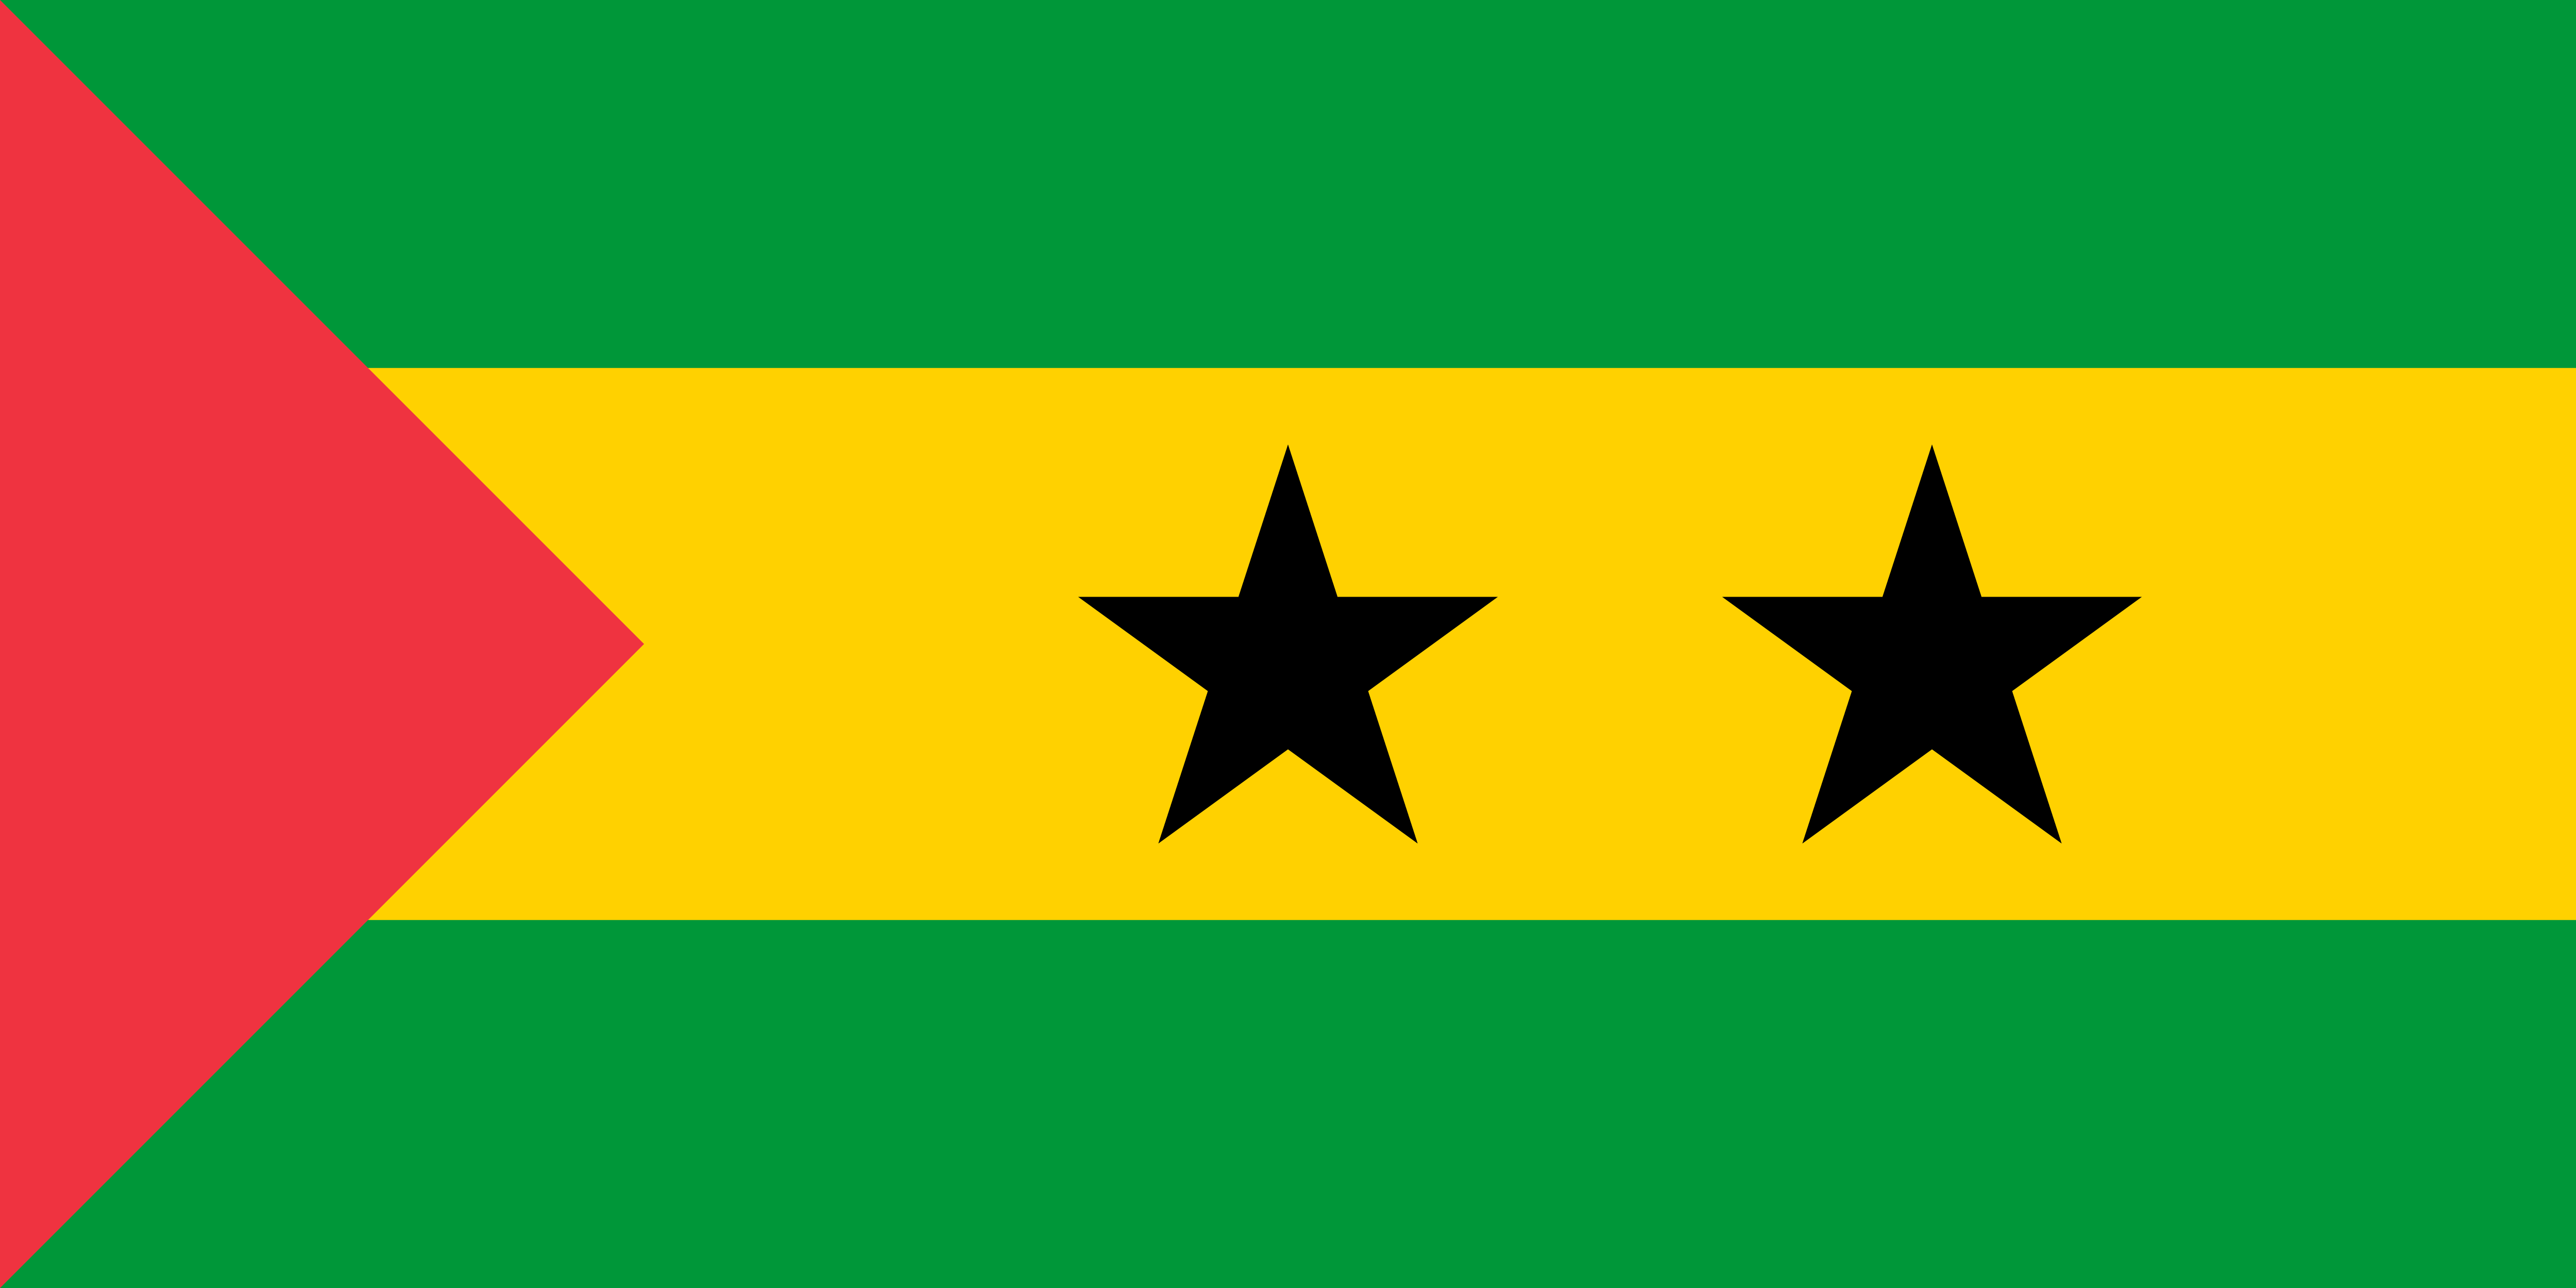 Sao Tome and Principe 